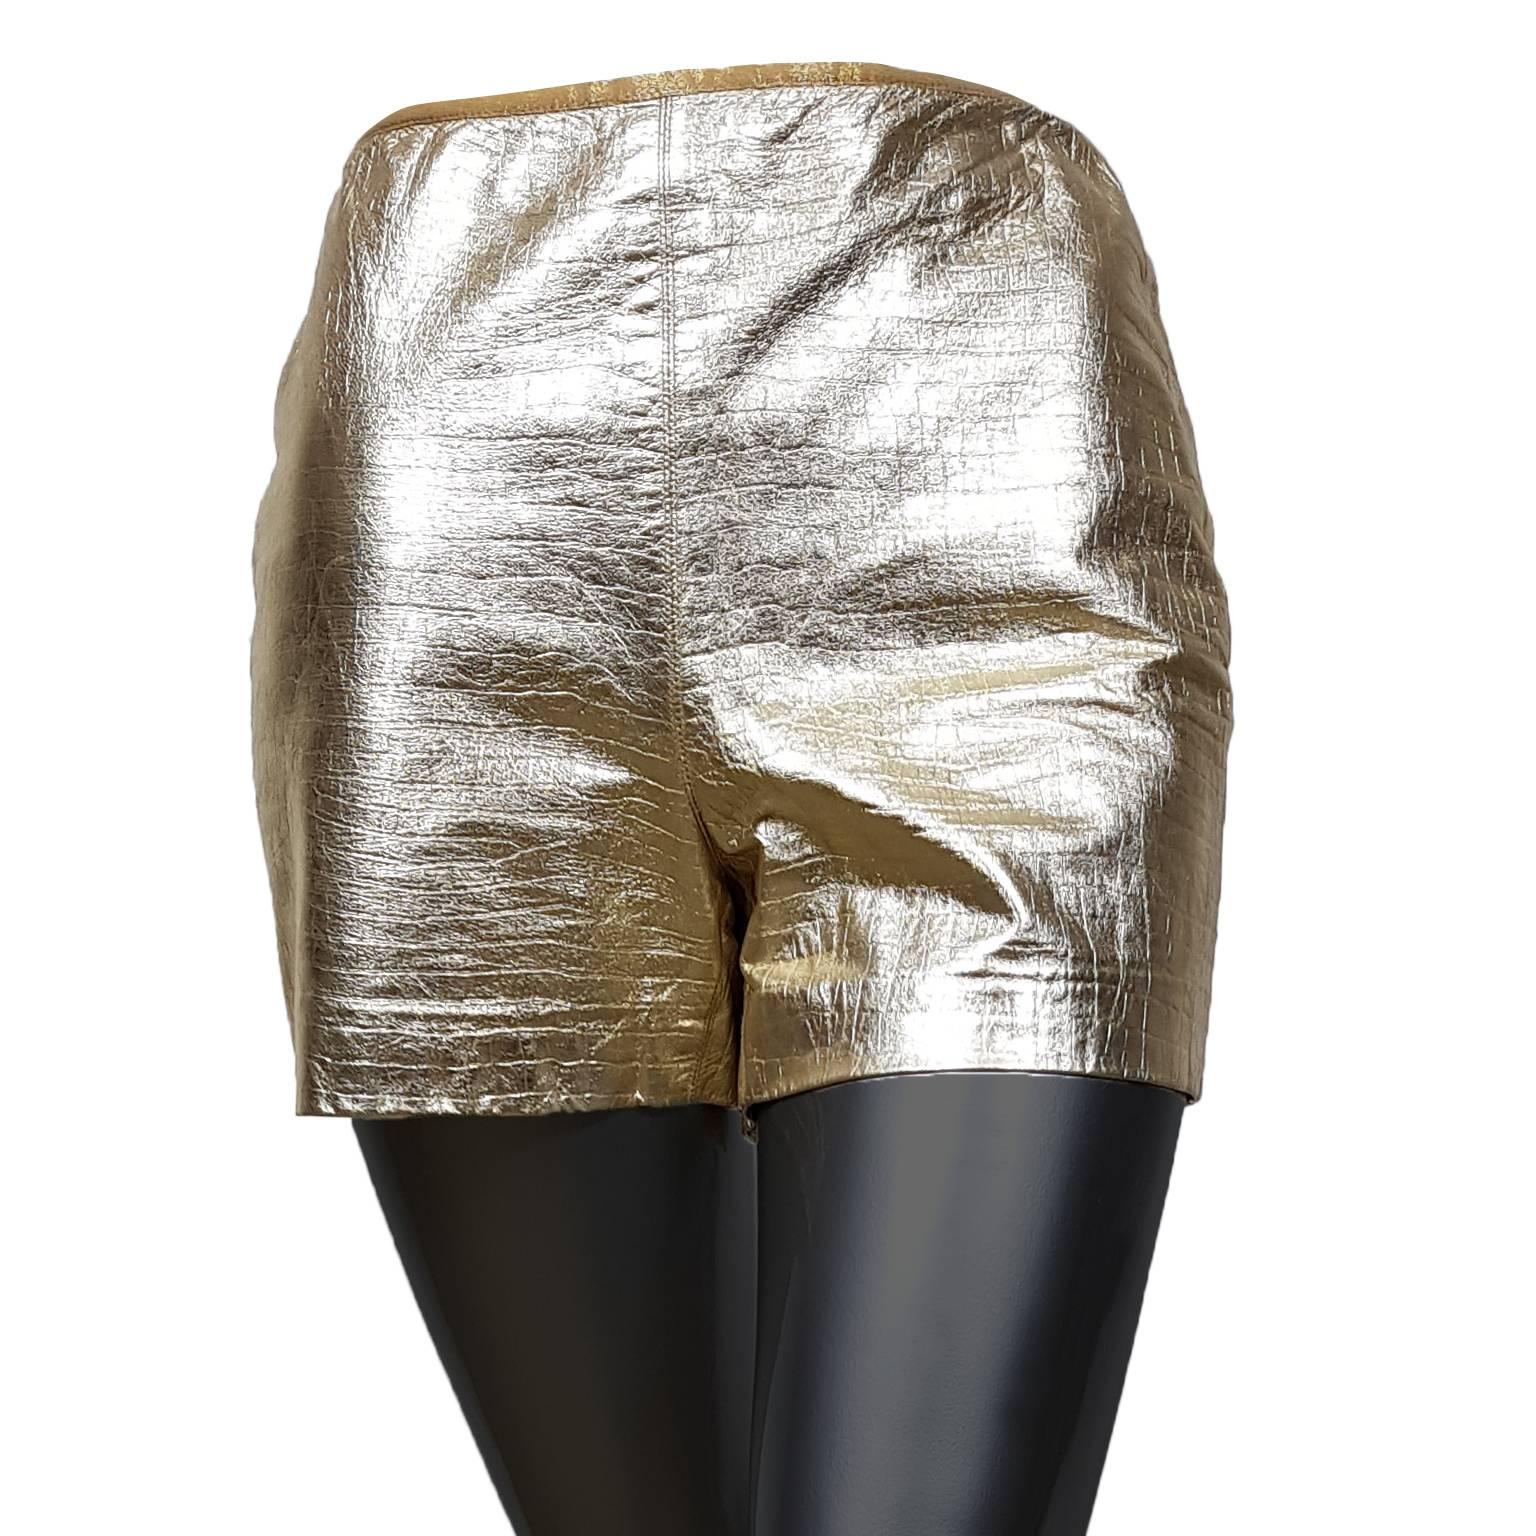 Versace Couture golden shorts from AW 1994, excellent condition.
Size : 42 IT, 38 EU
Waist : 66 cm
Hip 88 : cm
Length : 33 cm